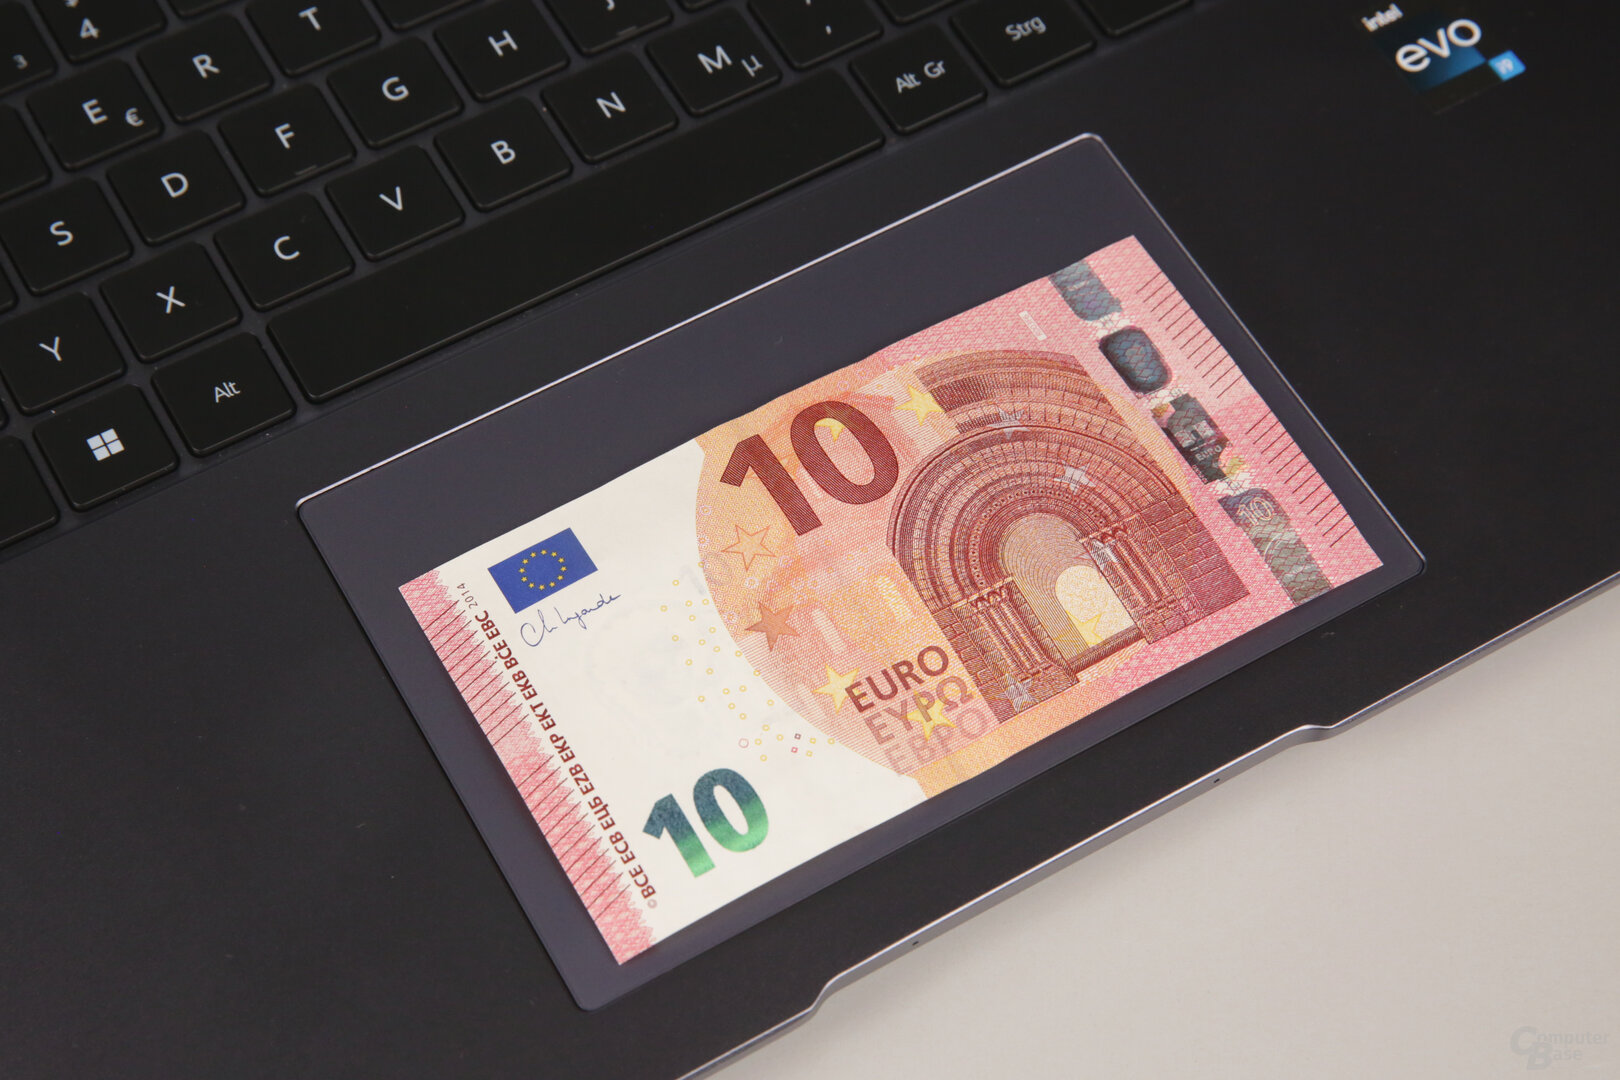 Ukuran touchpad dibandingkan dengan kategori 10 euro